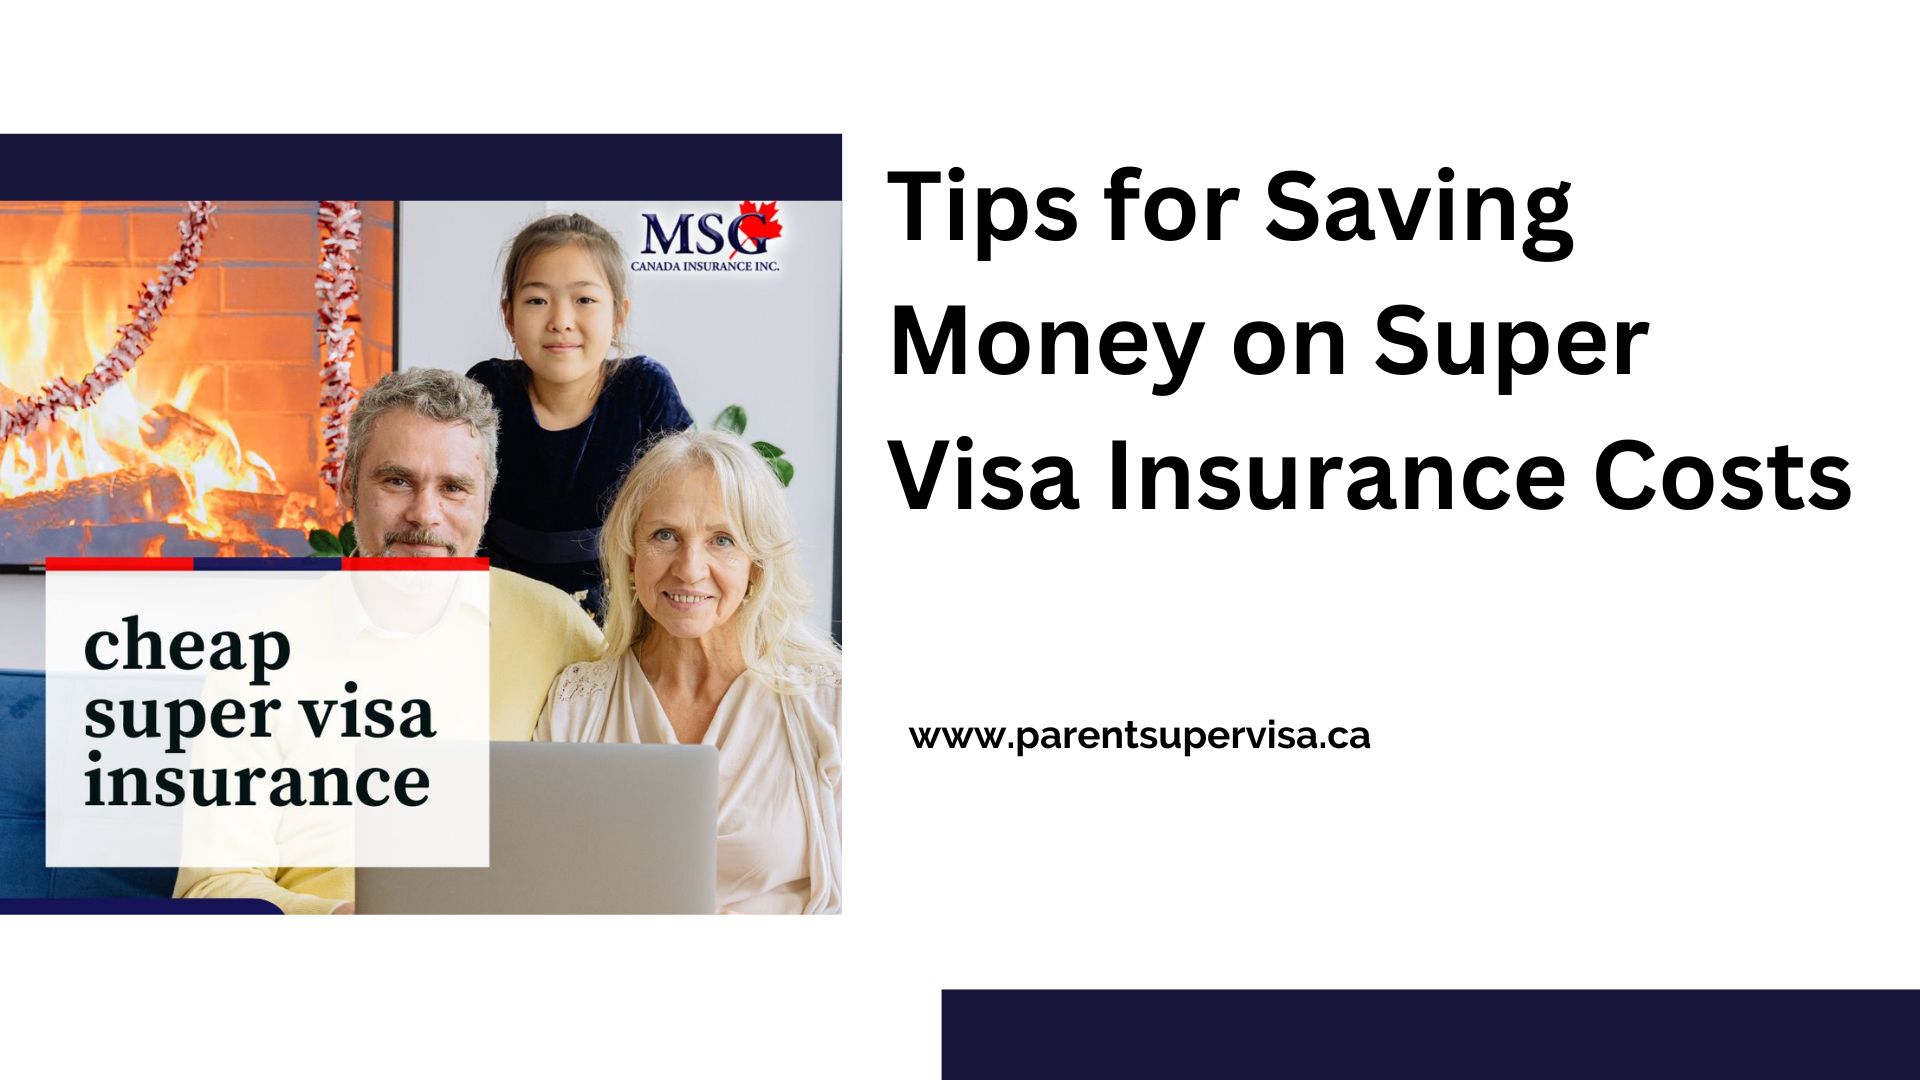 Super visa insurance cost